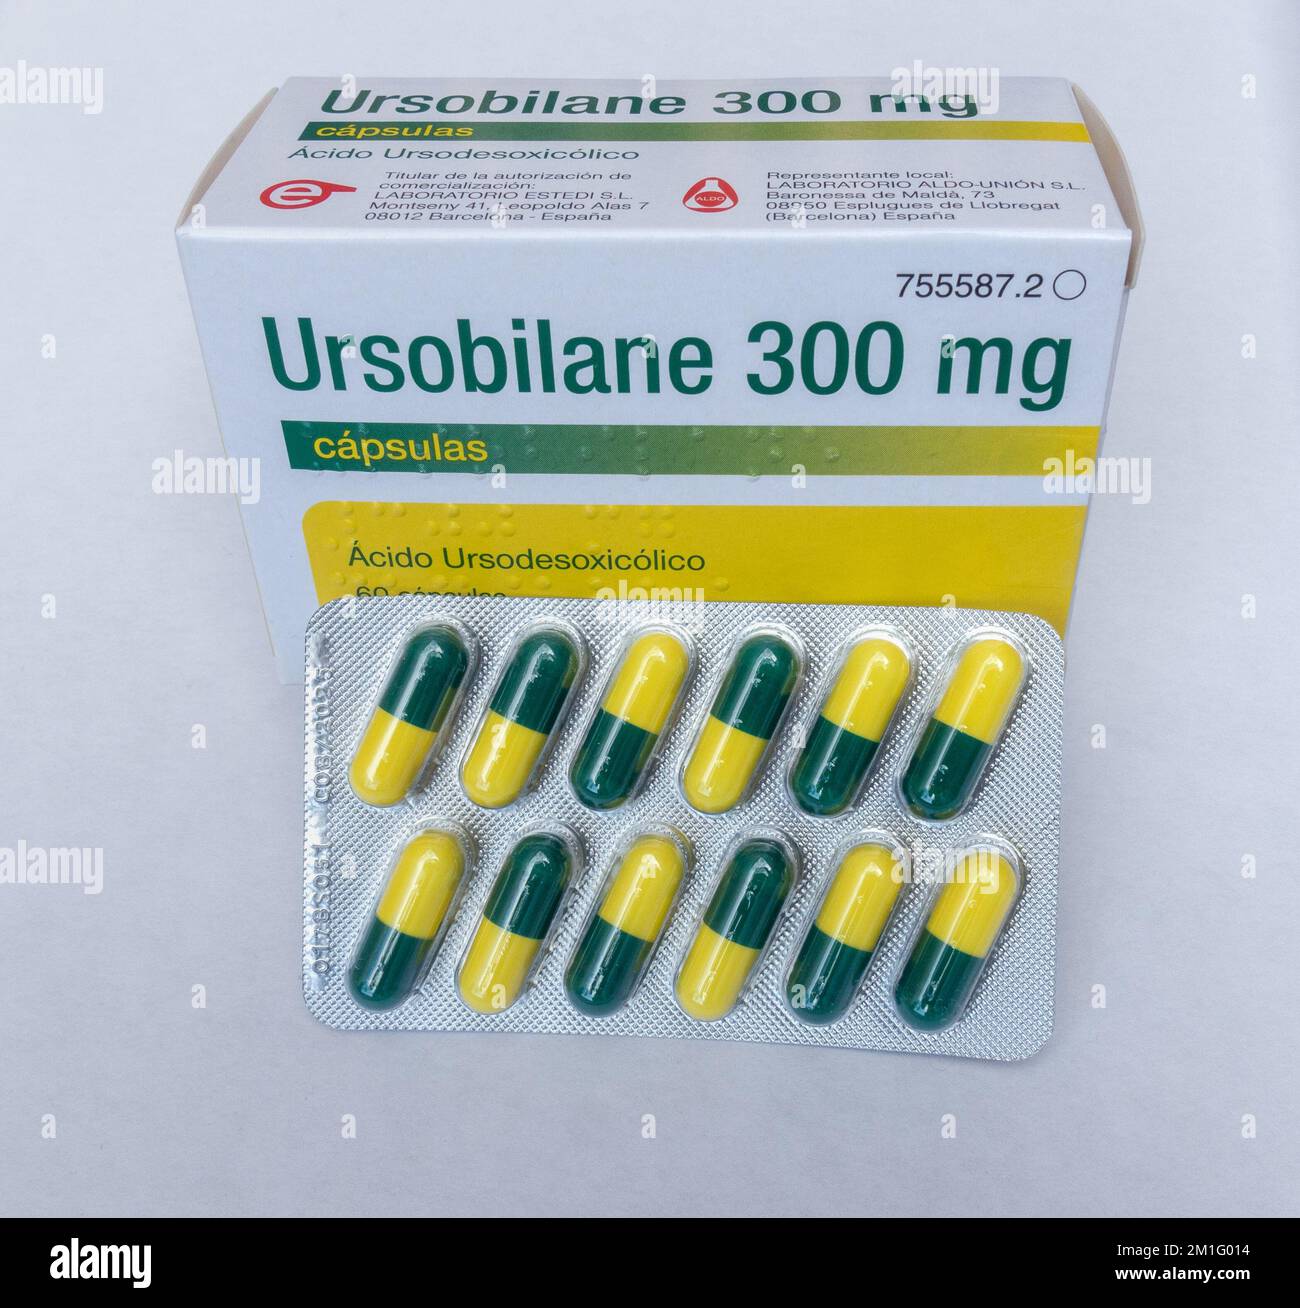 Ursobilane capsules (Ursodeoxycholic acid). Stock Photo